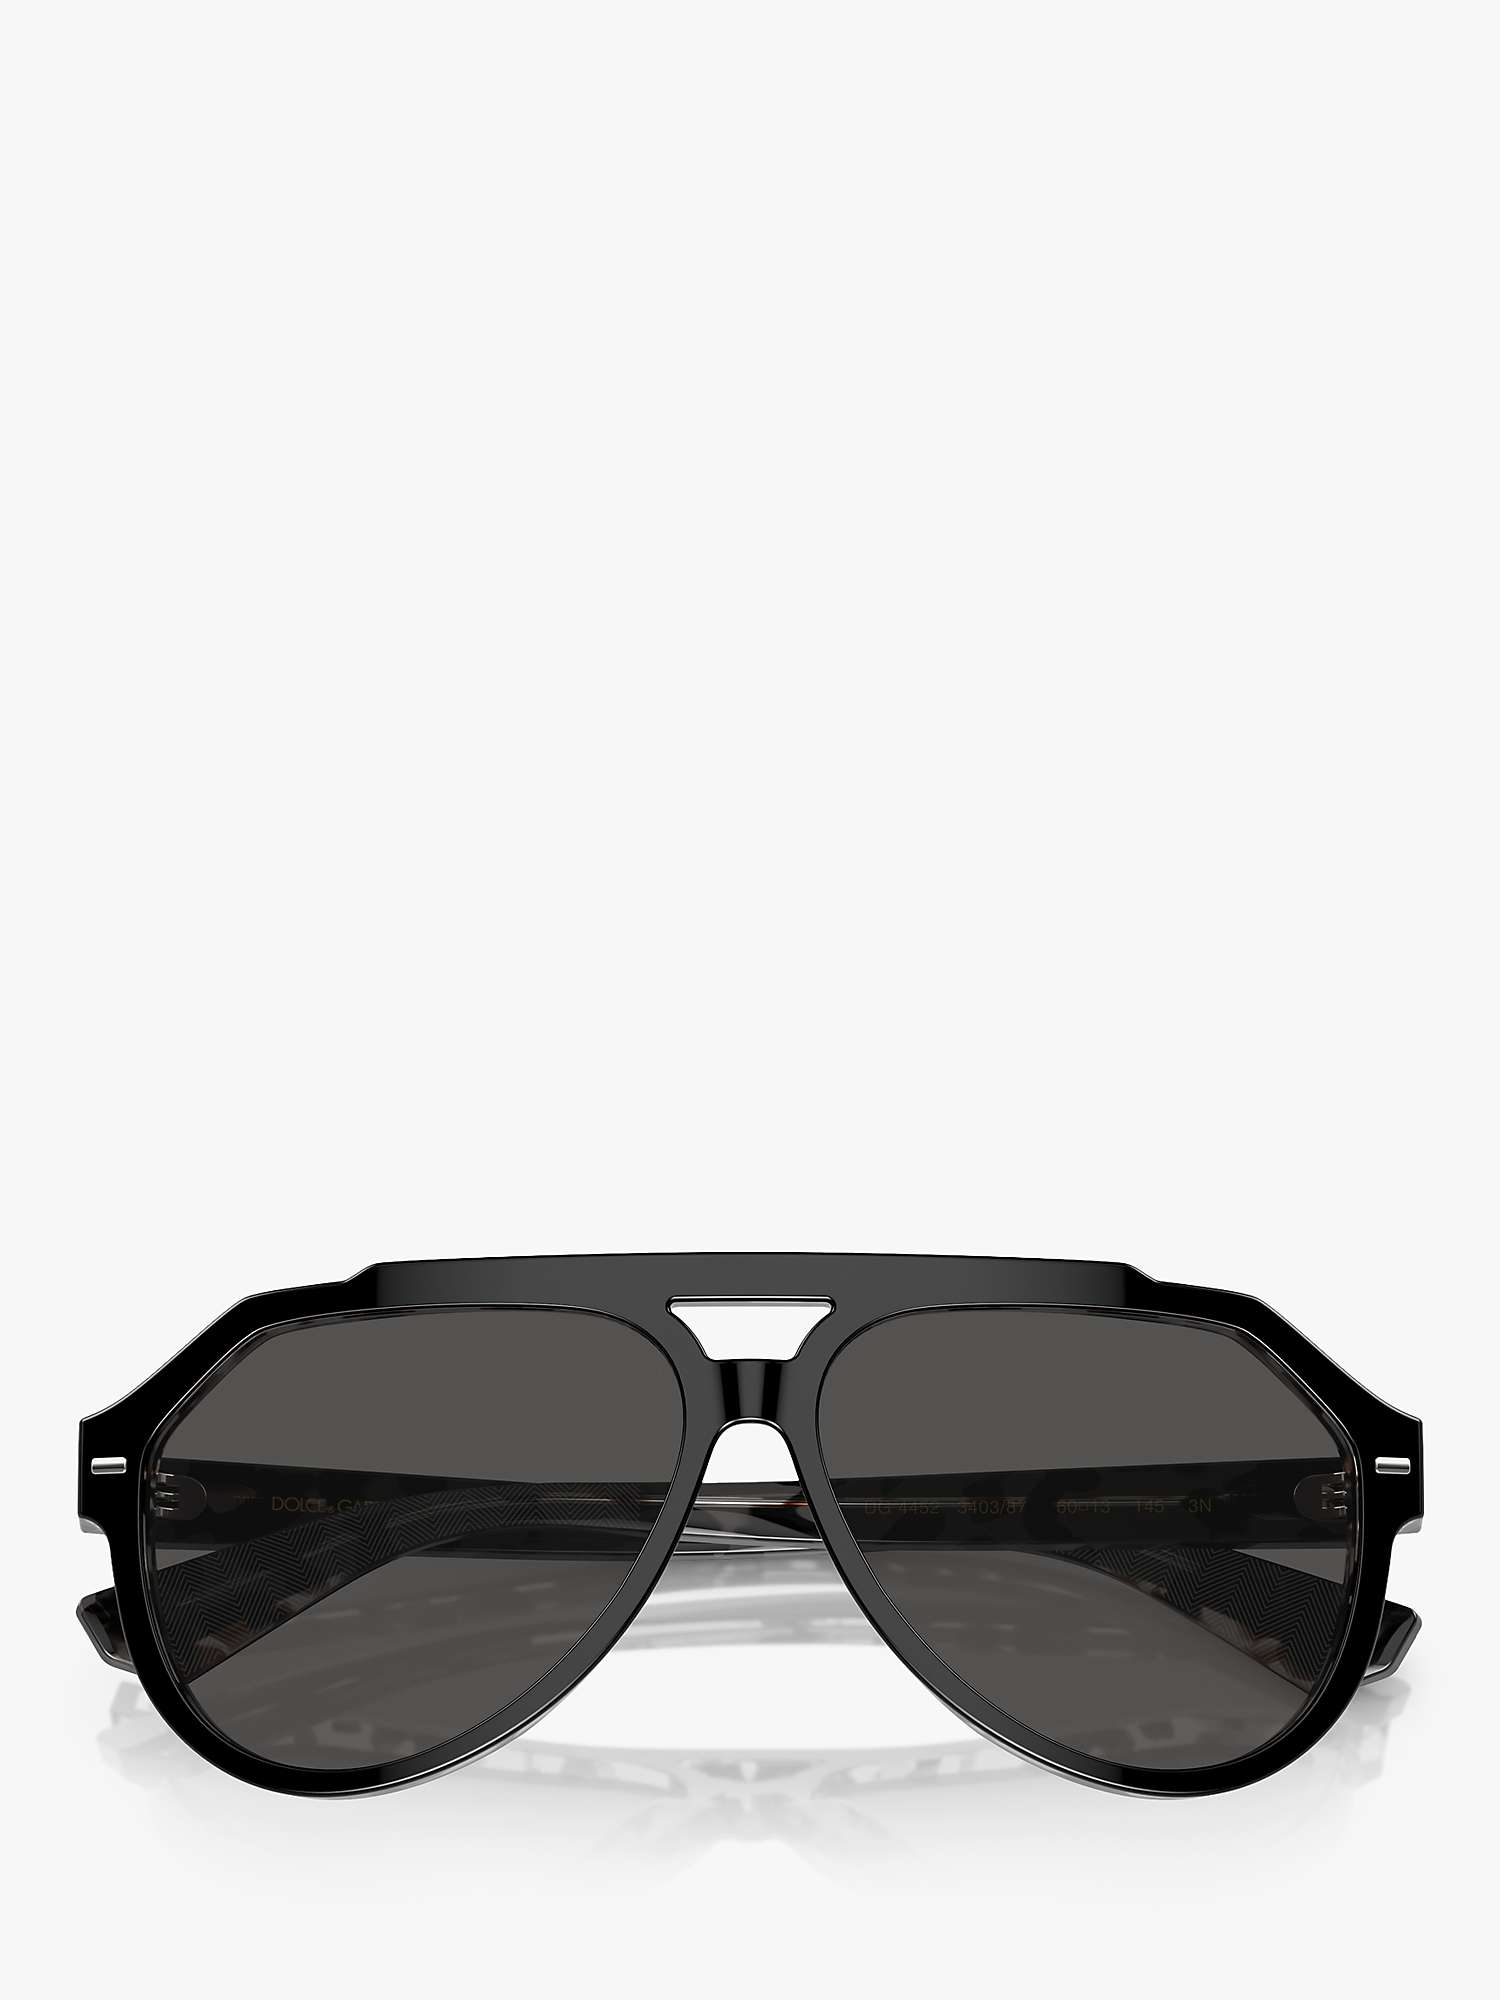 Buy Dolce & Gabbana DG4452 Men's Aviator Sunglasses, Black/Grey Online at johnlewis.com